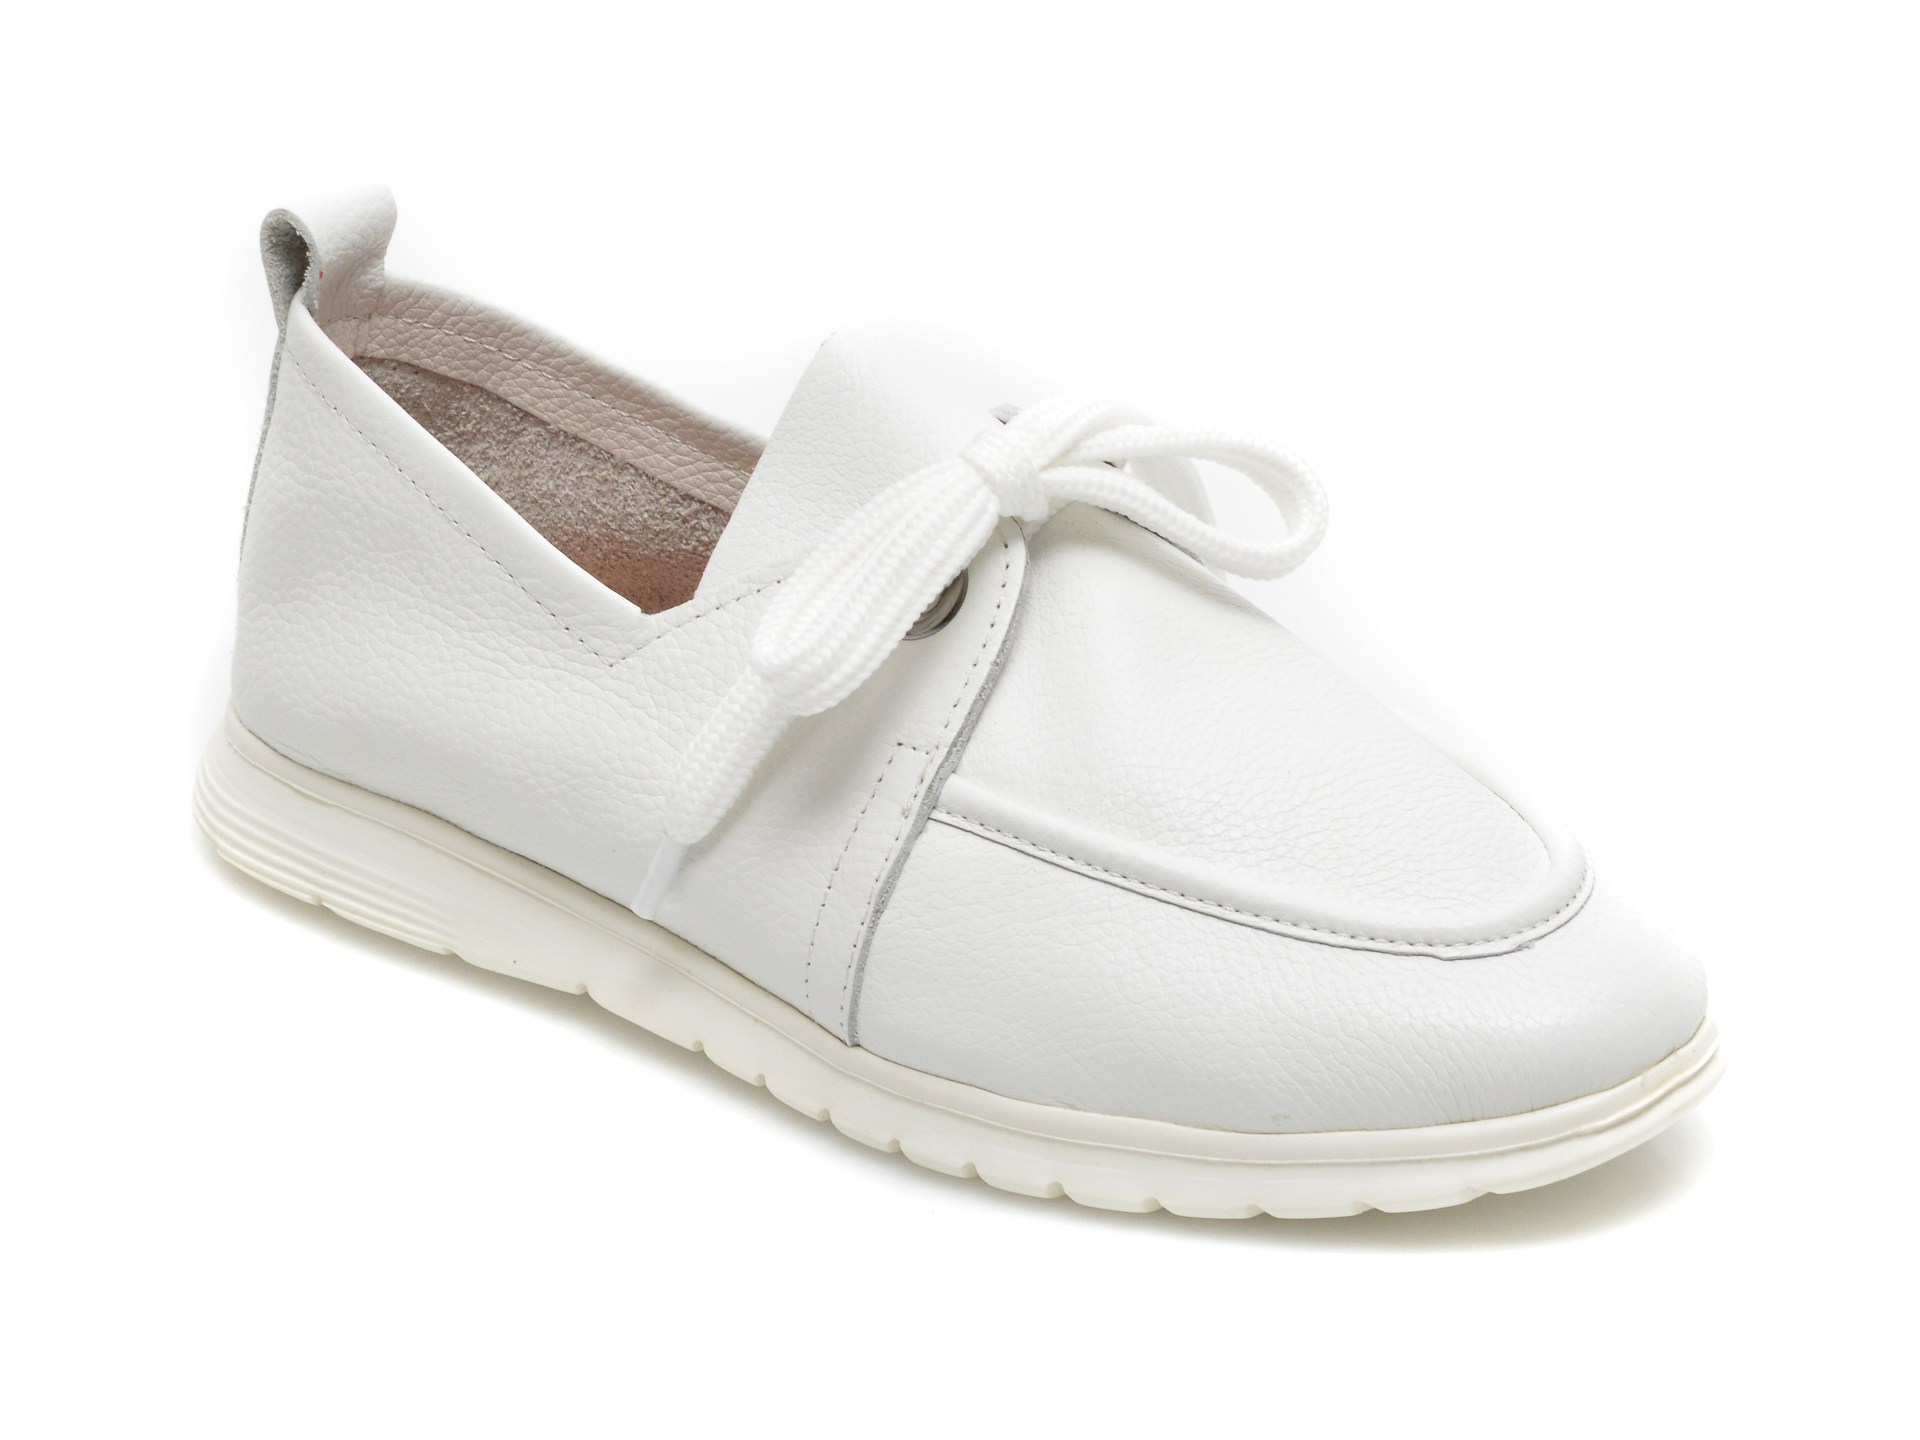 Pantofi TANCA albi, 935, din piele naturala otter.ro